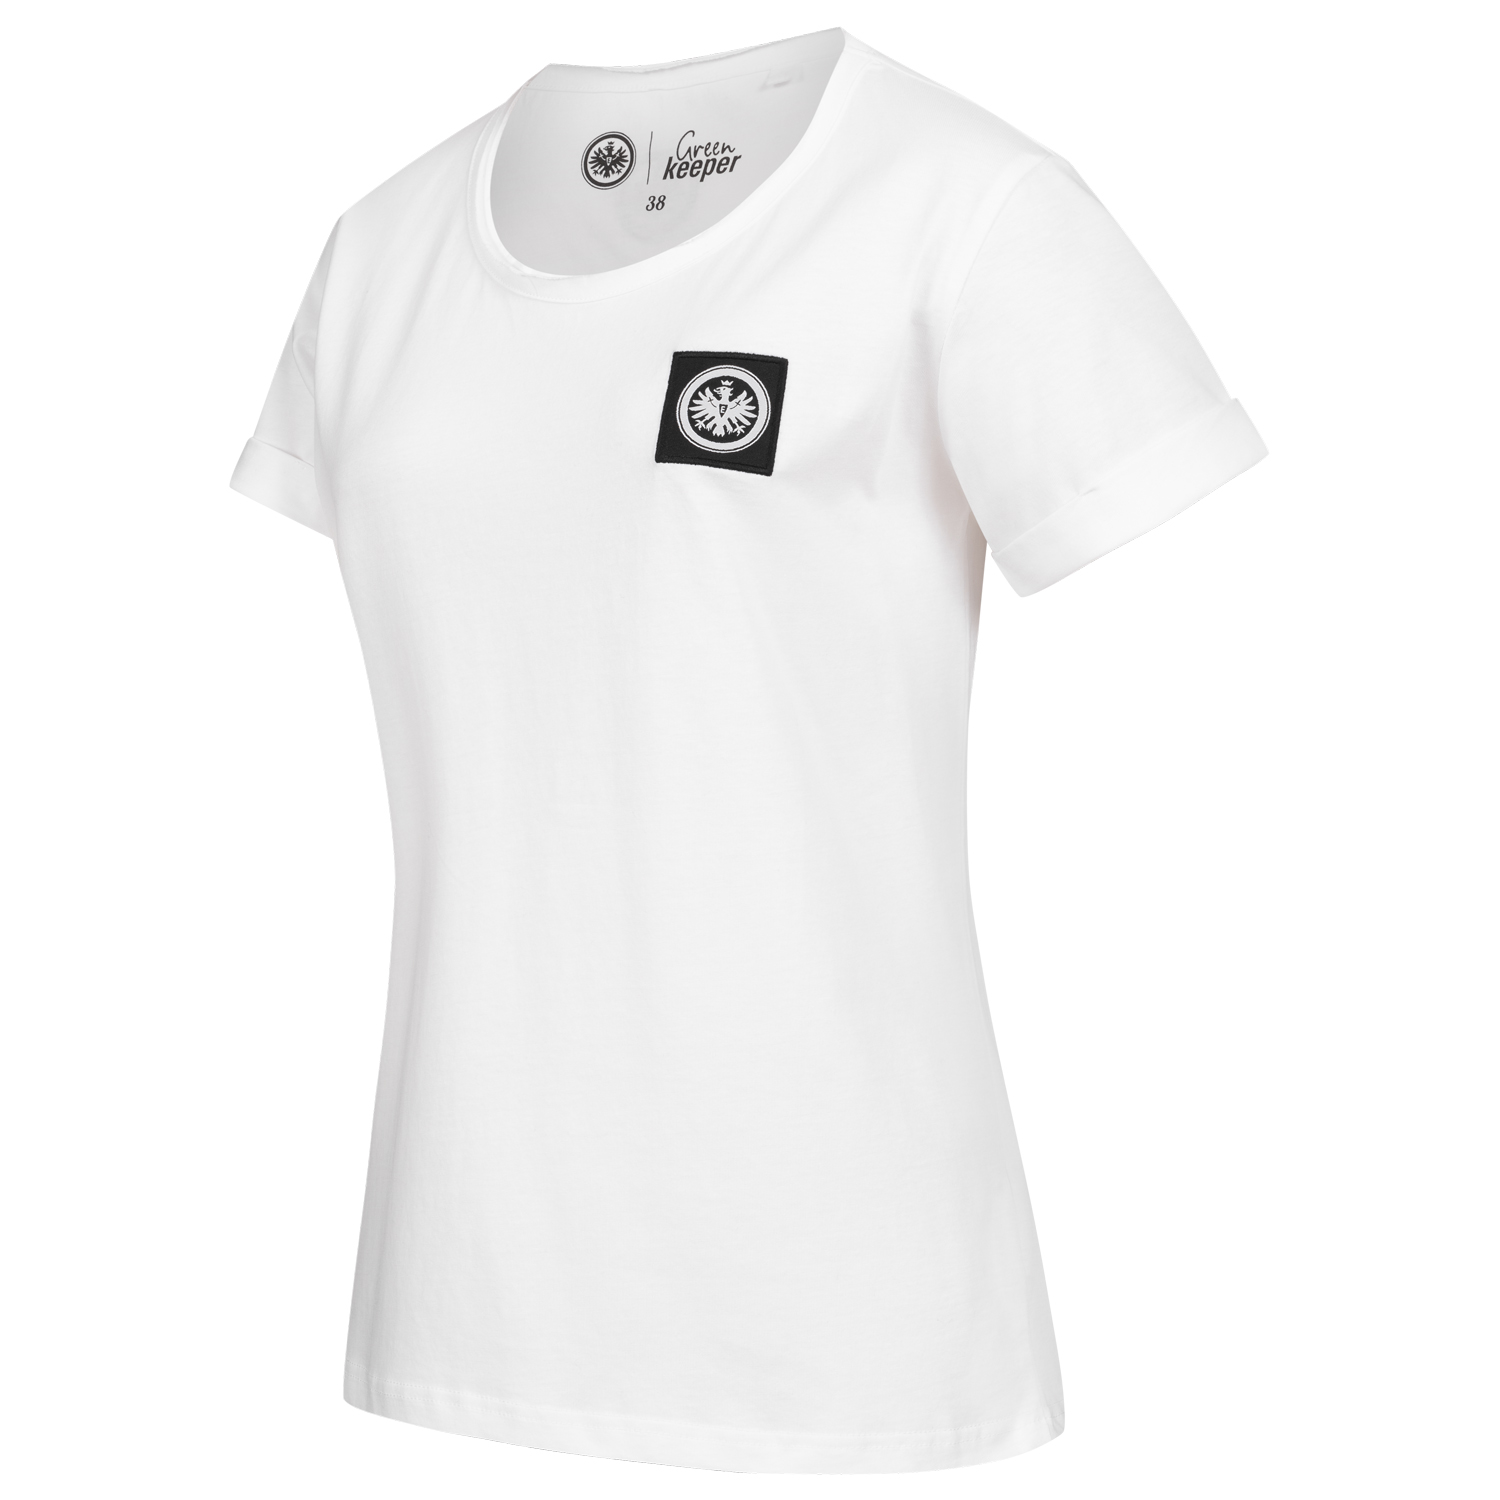 Bild 4: Damen Shirt Logo Badge White